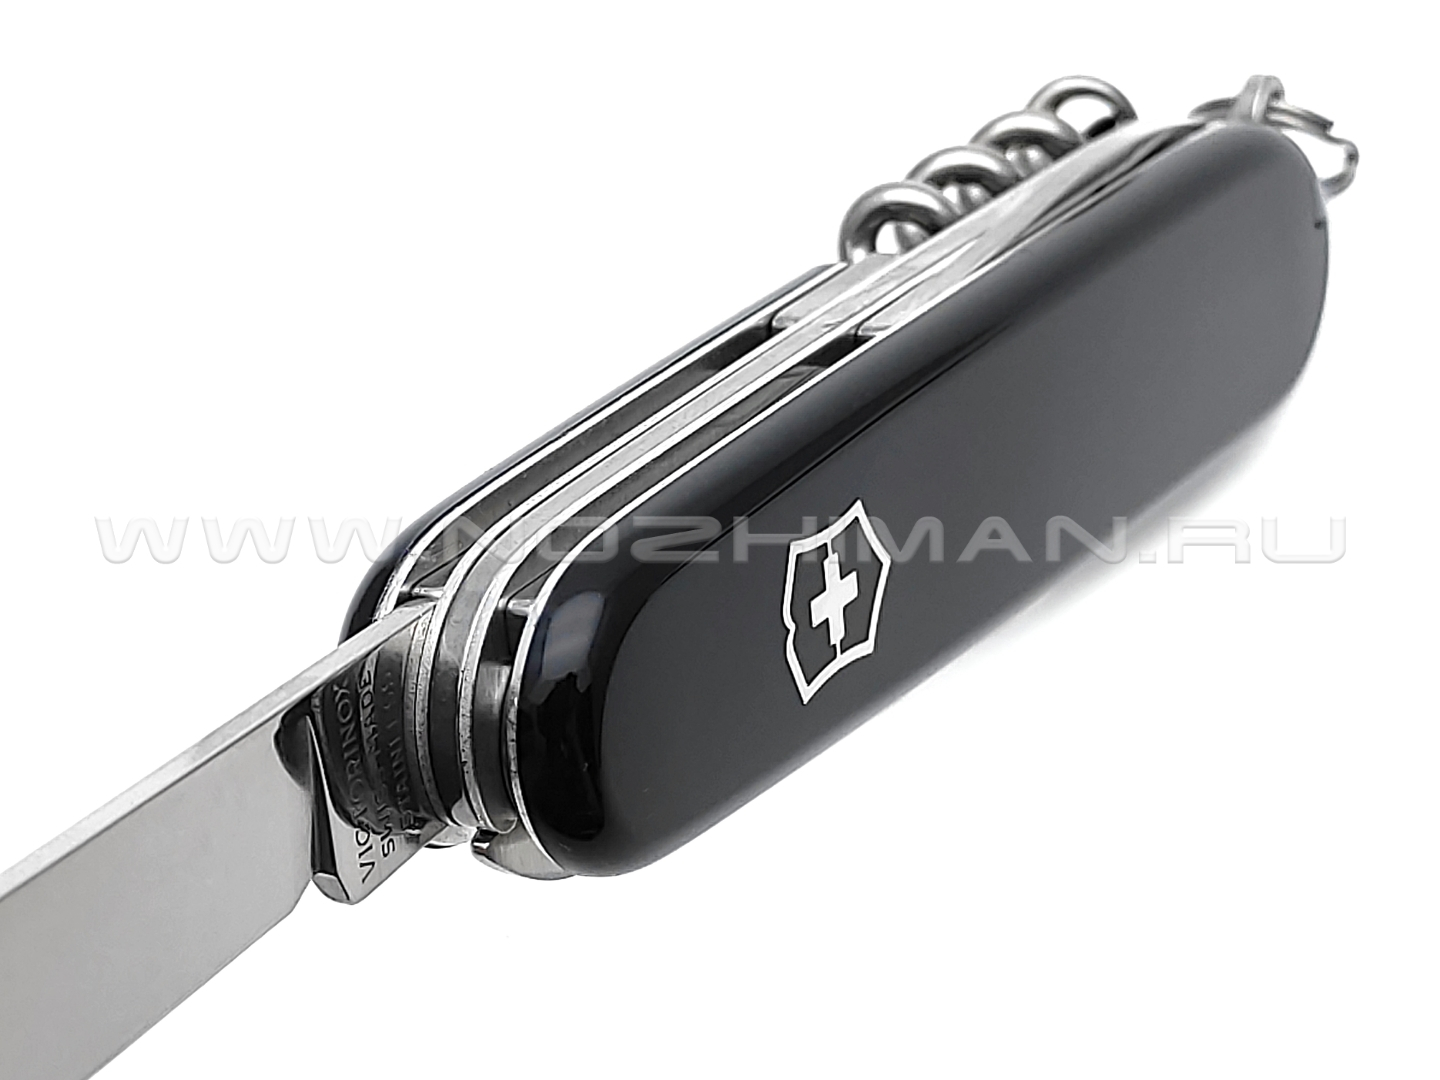 Швейцарский нож Victorinox 1.3613.3 Camper Black (13 функций)